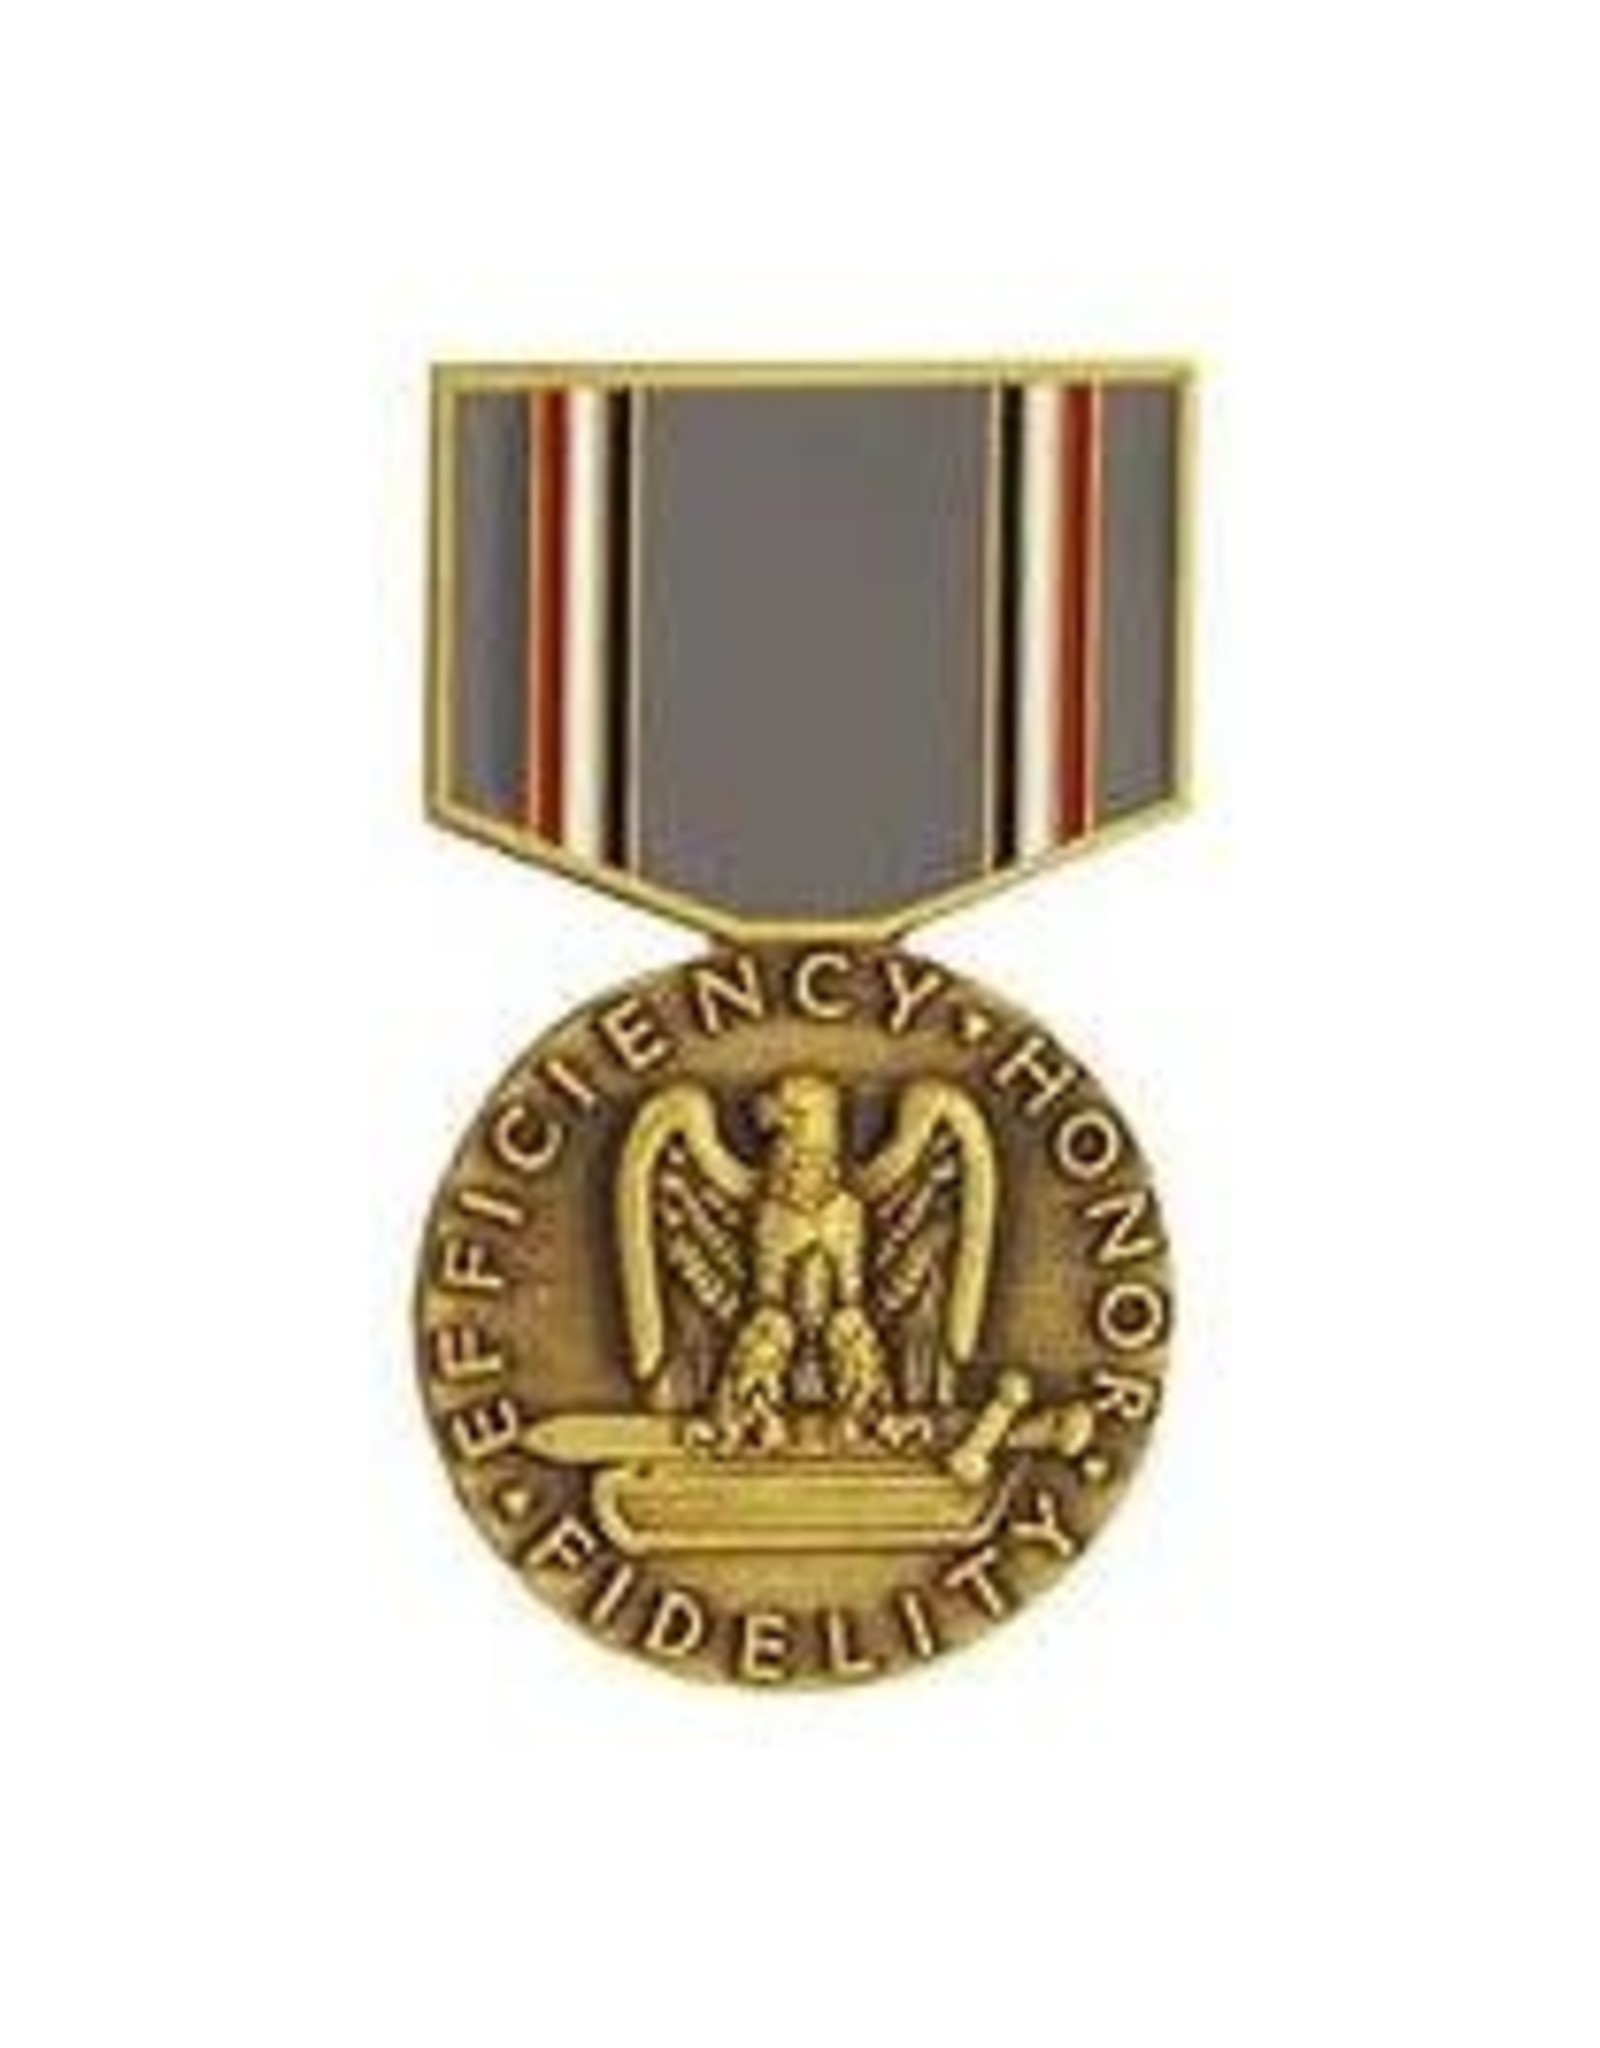 Pin - Medal, USAF Good Conduct